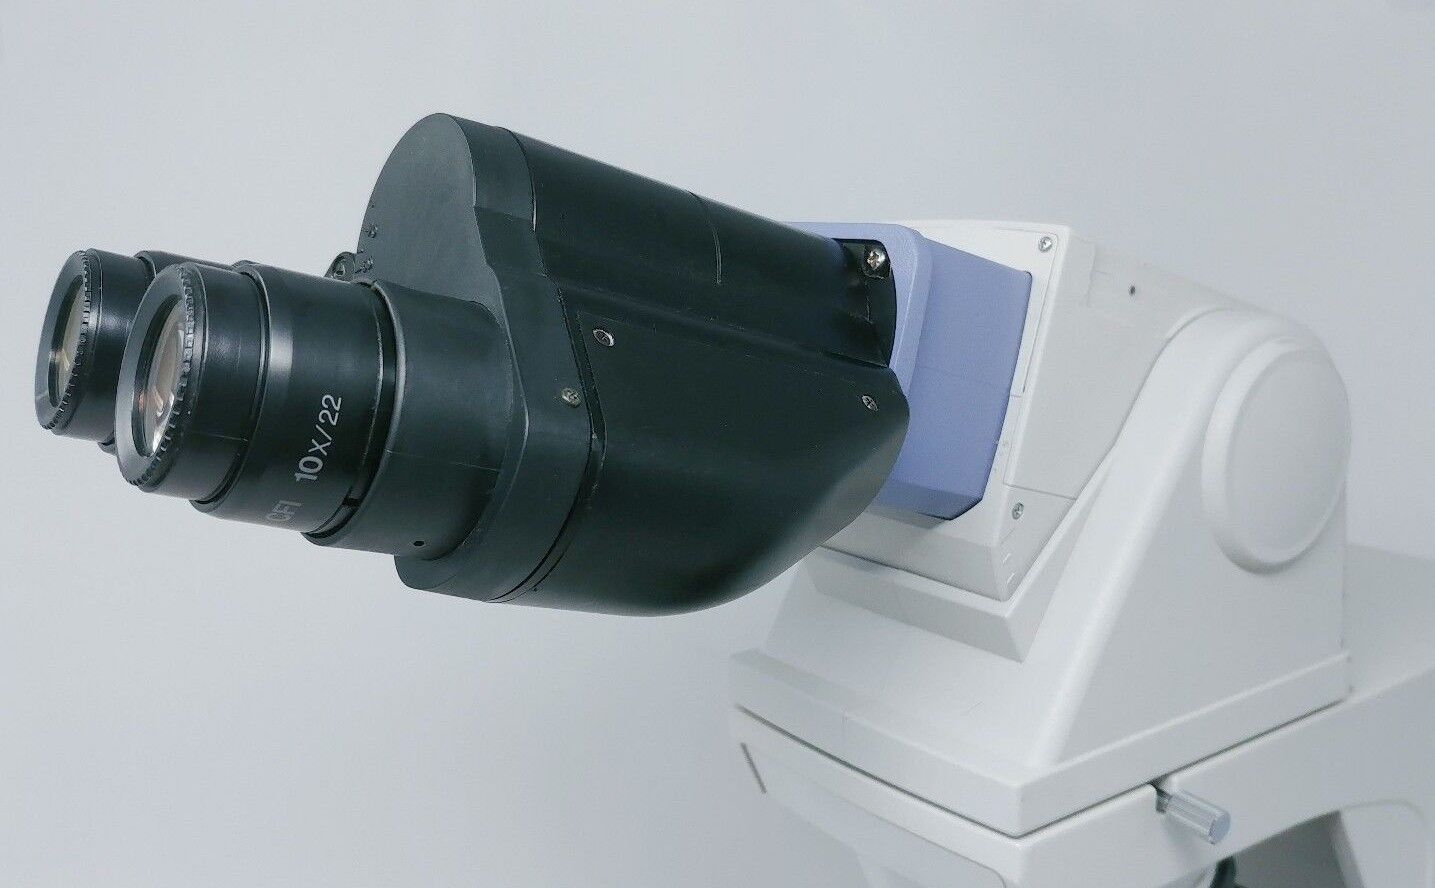 Nikon Microscope Eclipse E400 with 50x oil and Tilting Telescoping Head - microscopemarketplace